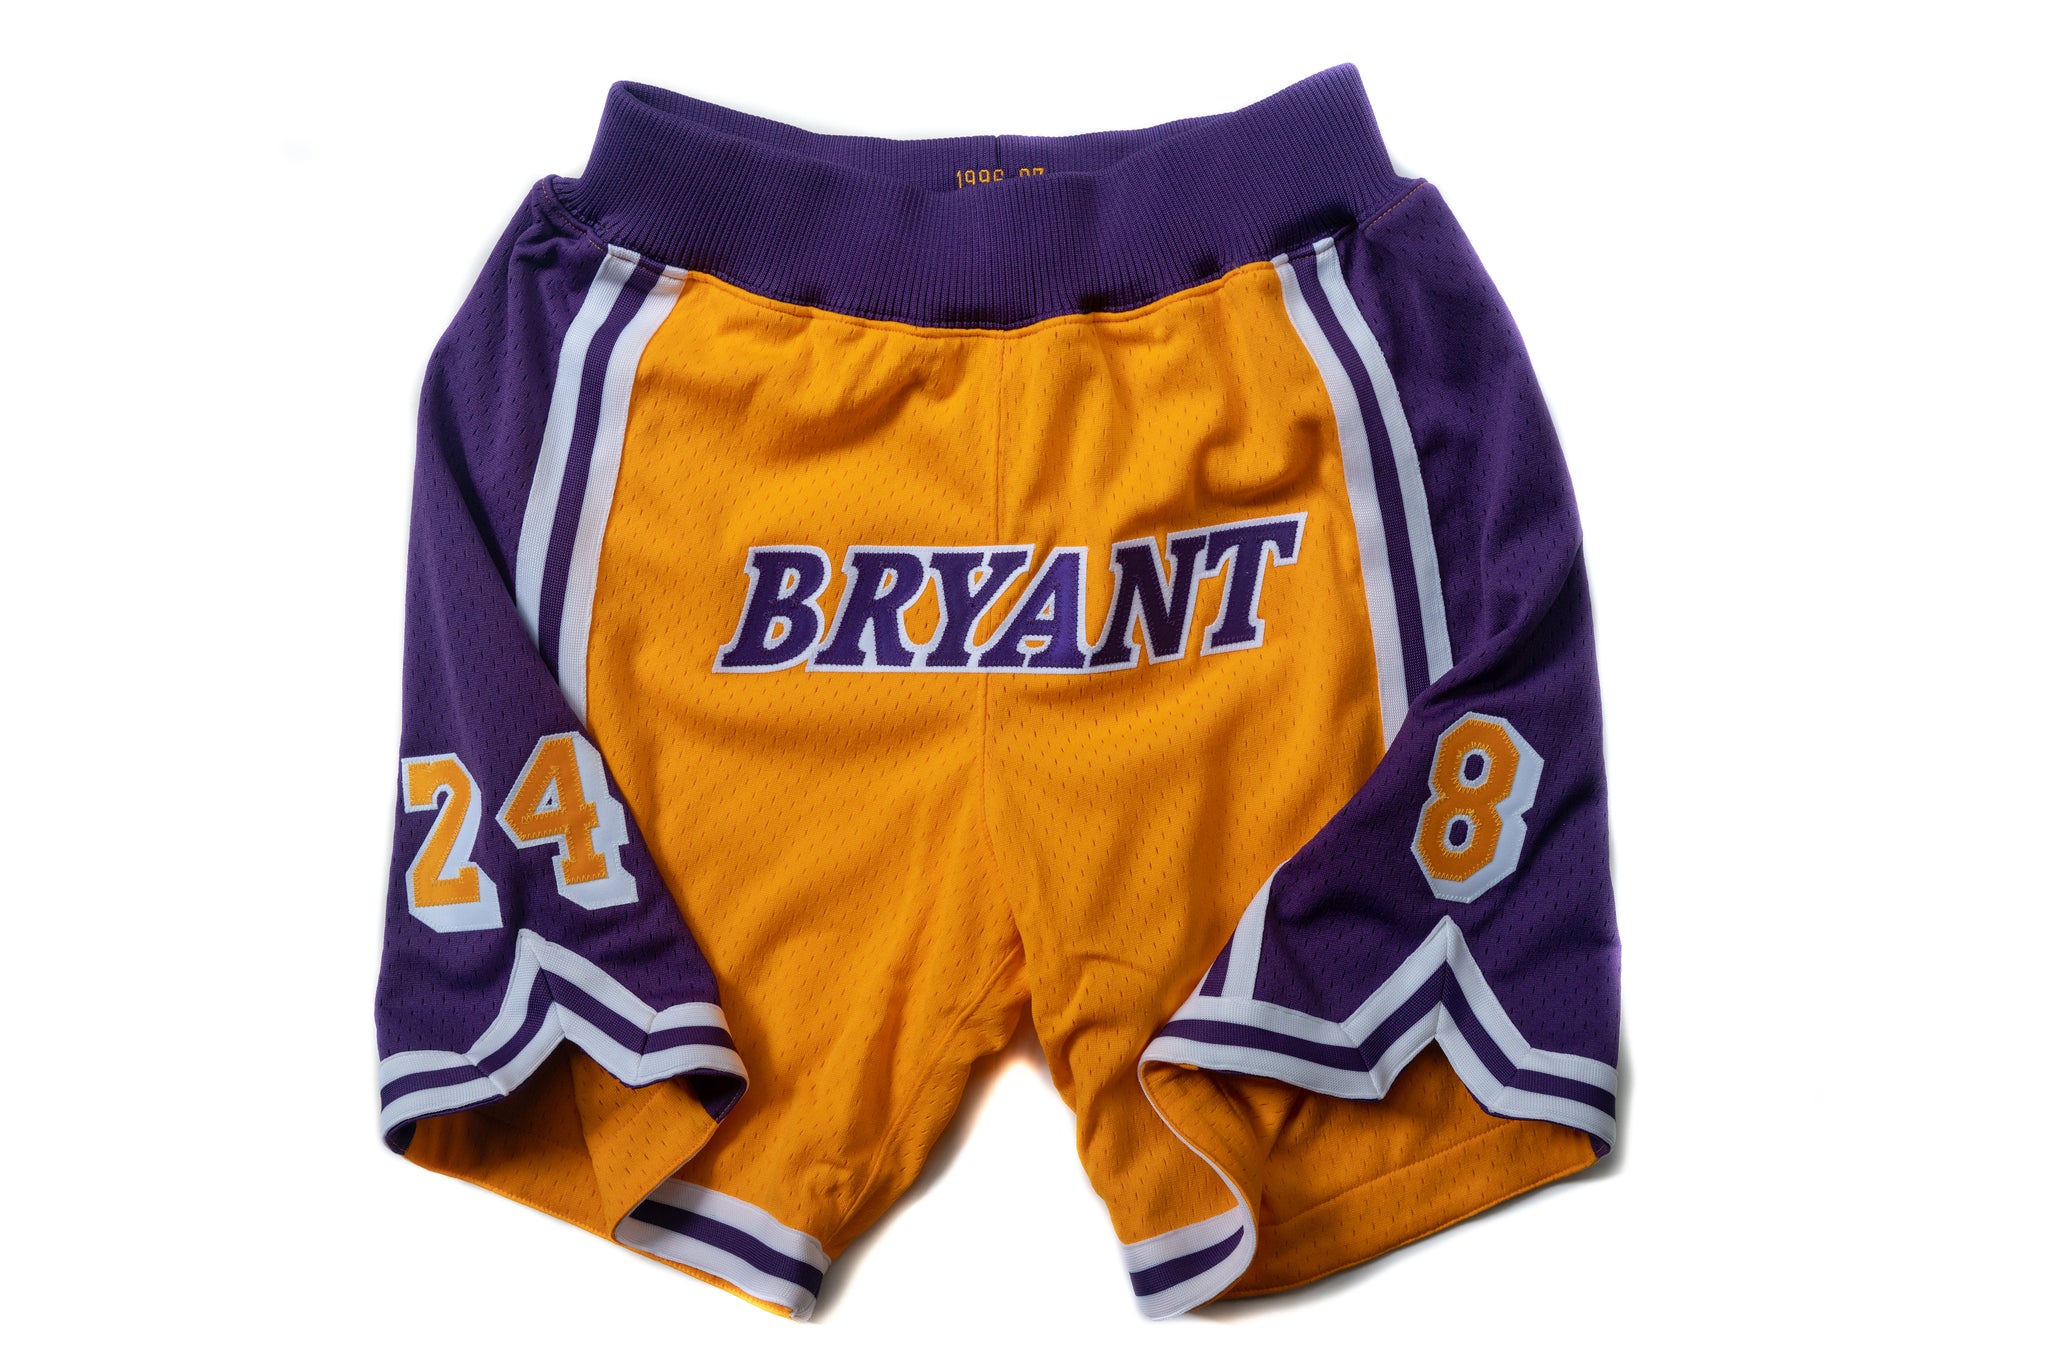 Mitchell & Ness Los Angeles Lakers "BRYANT" Kobe Bryant Authentic Shorts